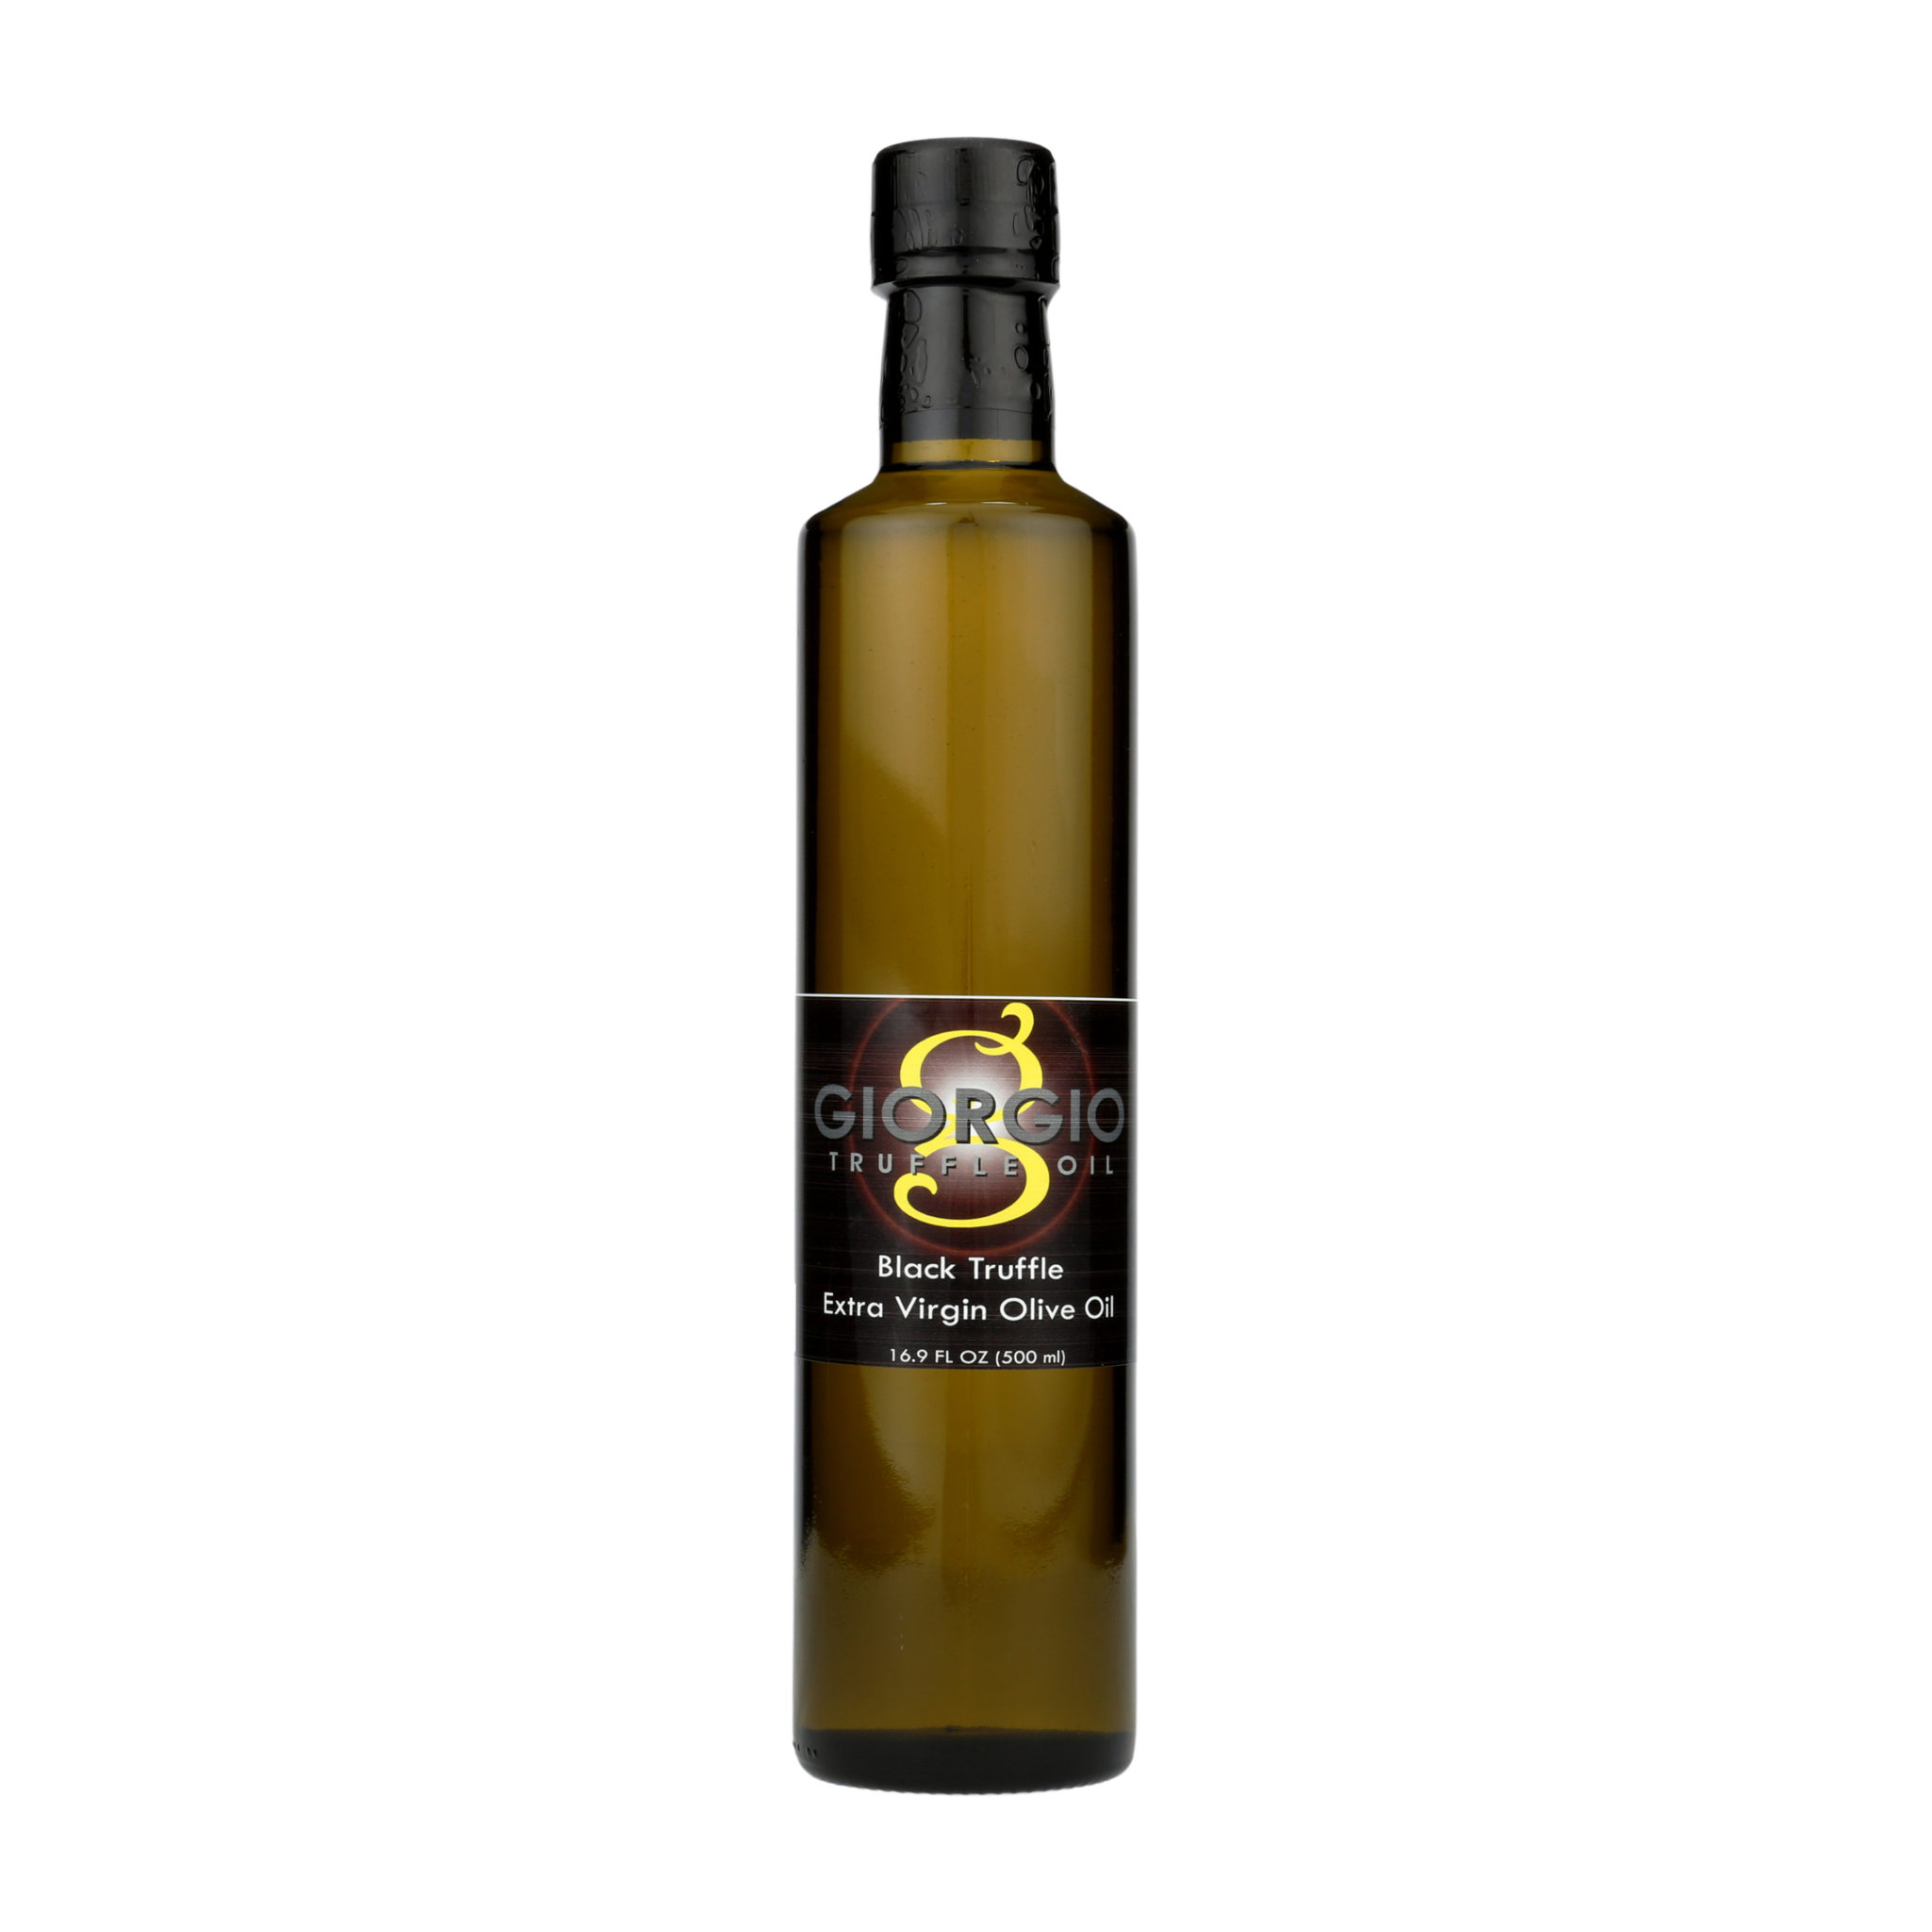 https://giorgiotruffleshop.com/product/black-truffle-extra-virgin-olive-oil-16-9-500ml/